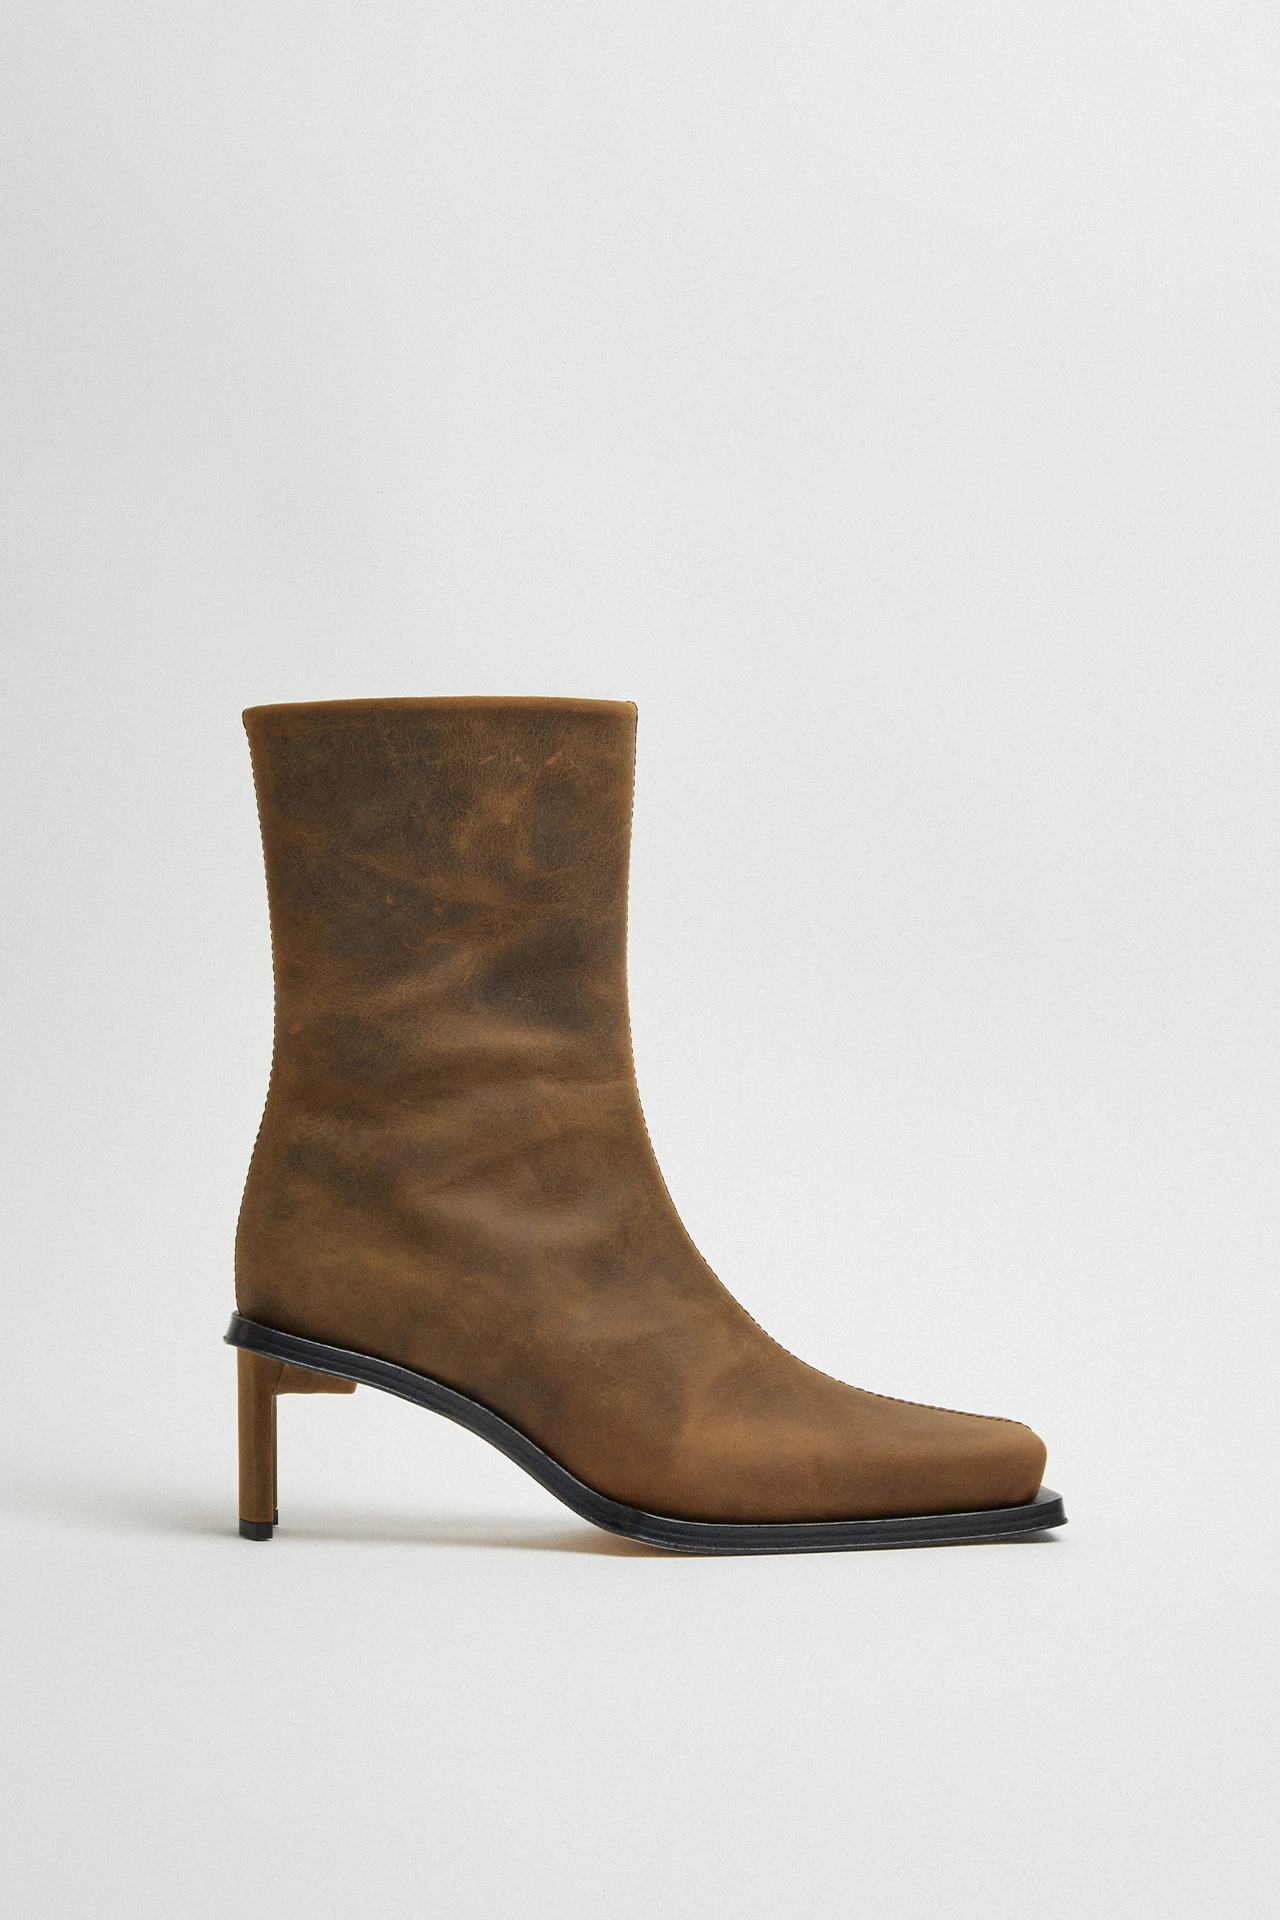 Miista-brenda-brown-ankle-boots-01